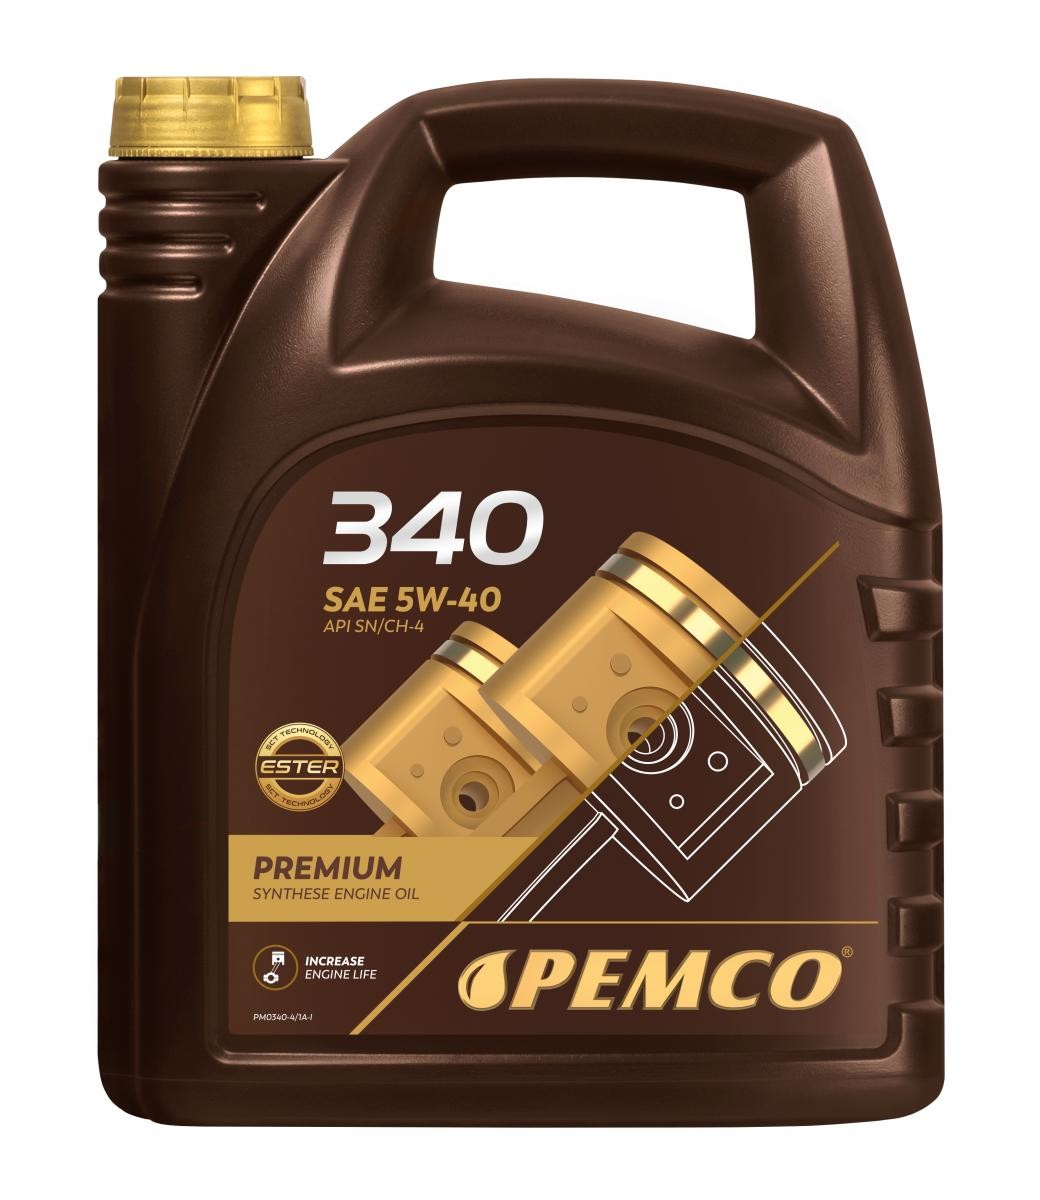 PEMCO iDRIVE 300, iDRIVE 340 PM0340-4 Engine oil 5W-40, 4l, Synthetic Oil